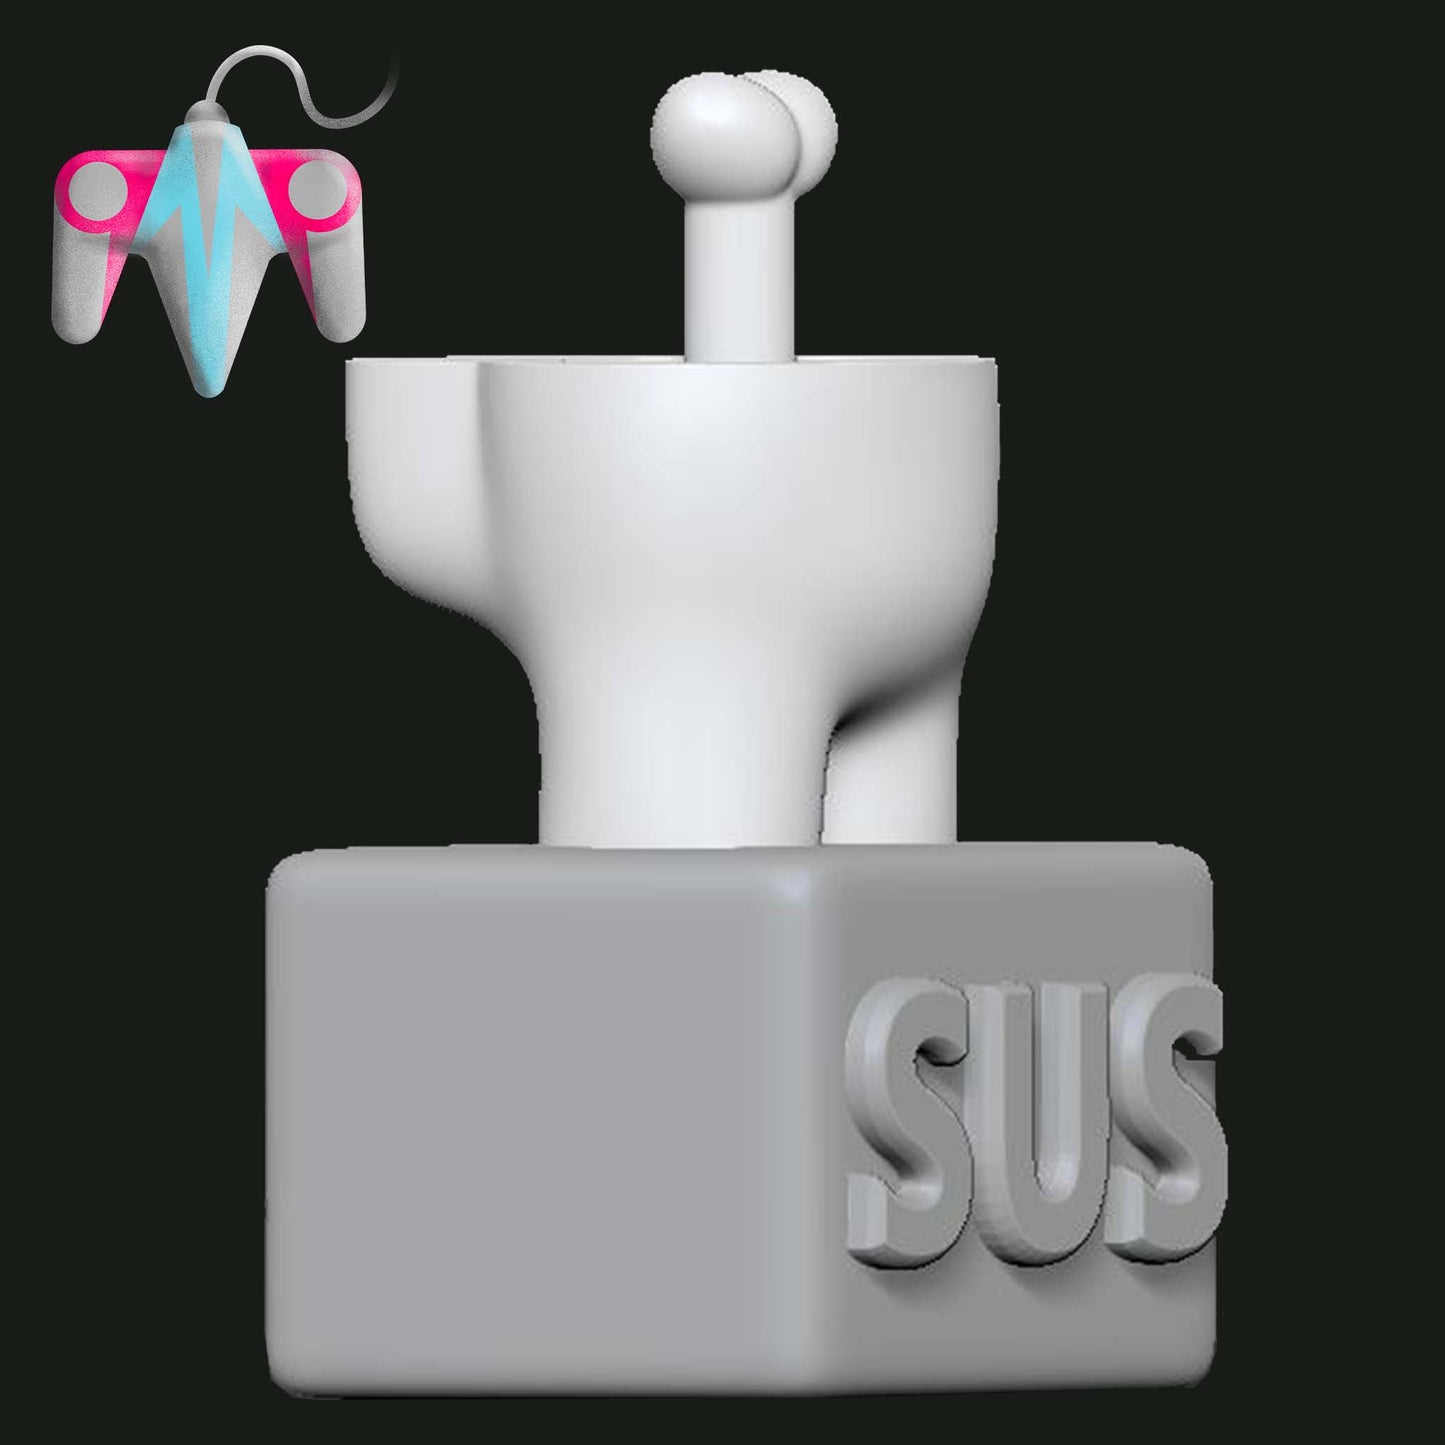 SUS Statue (3D File)